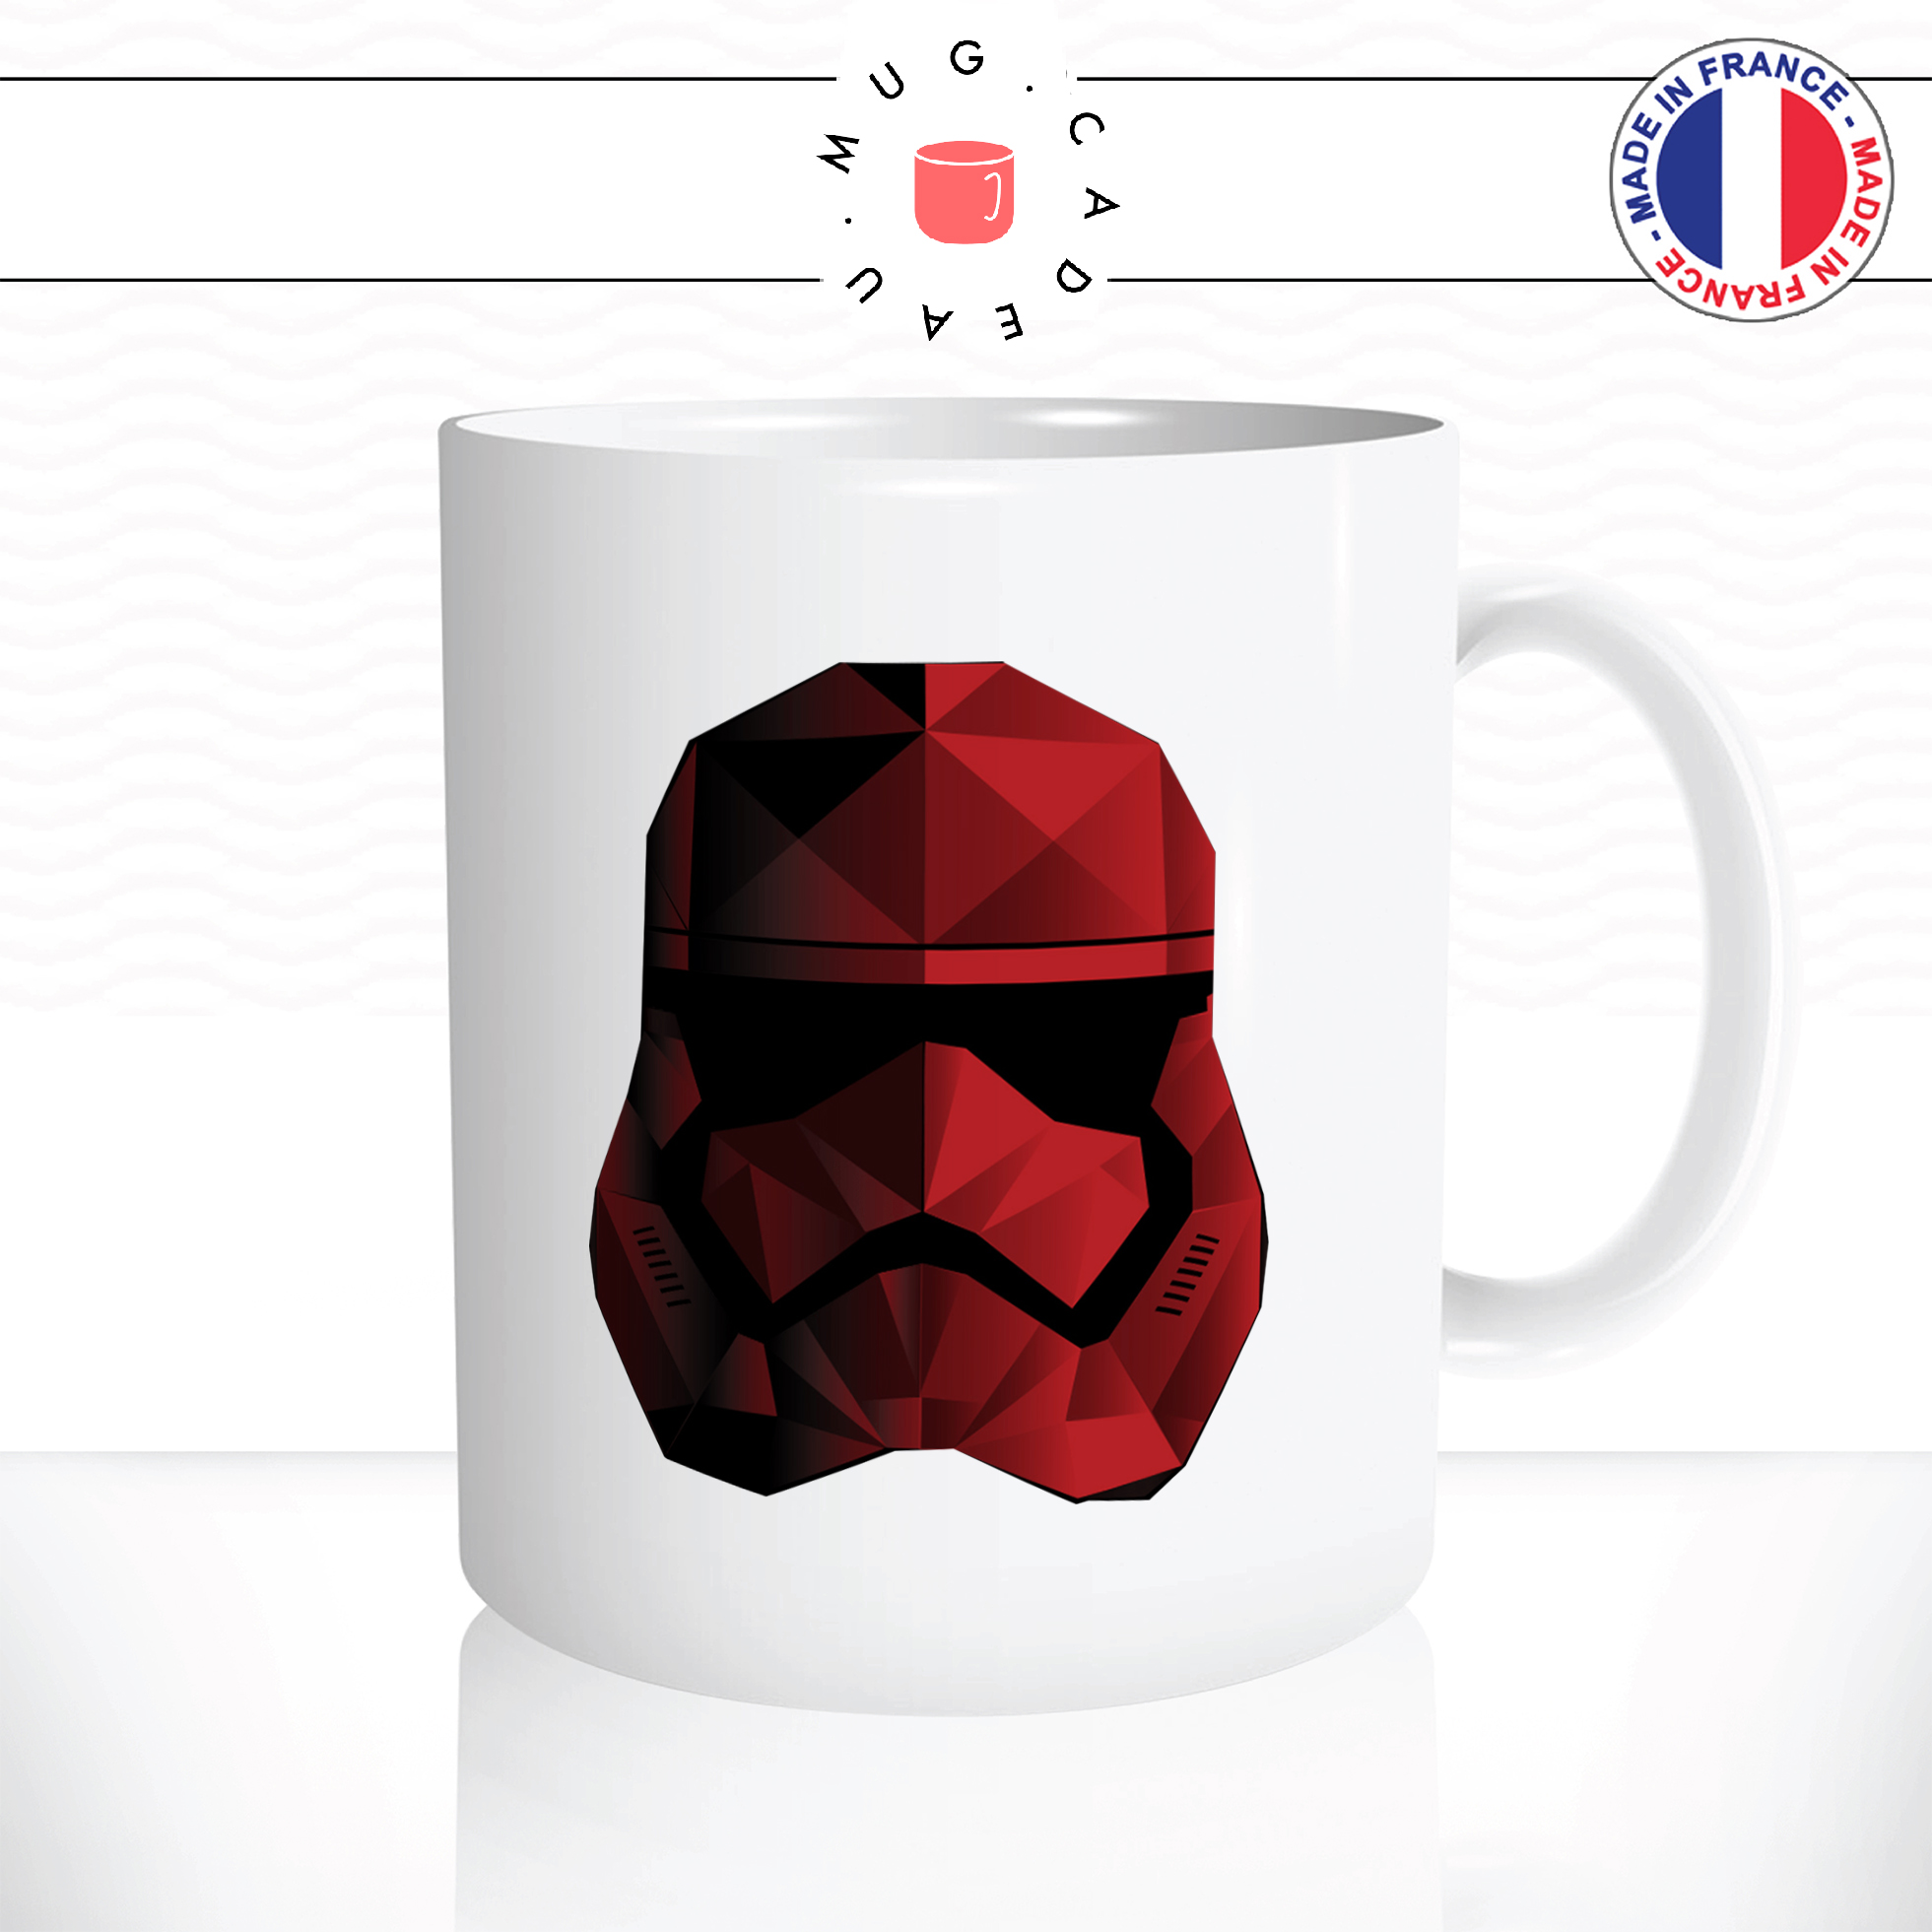 mug-tasse-ref8-starwars-clone-casque-rouge-origami-cafe-the-mugs-tasses-personnalise-anse-droite